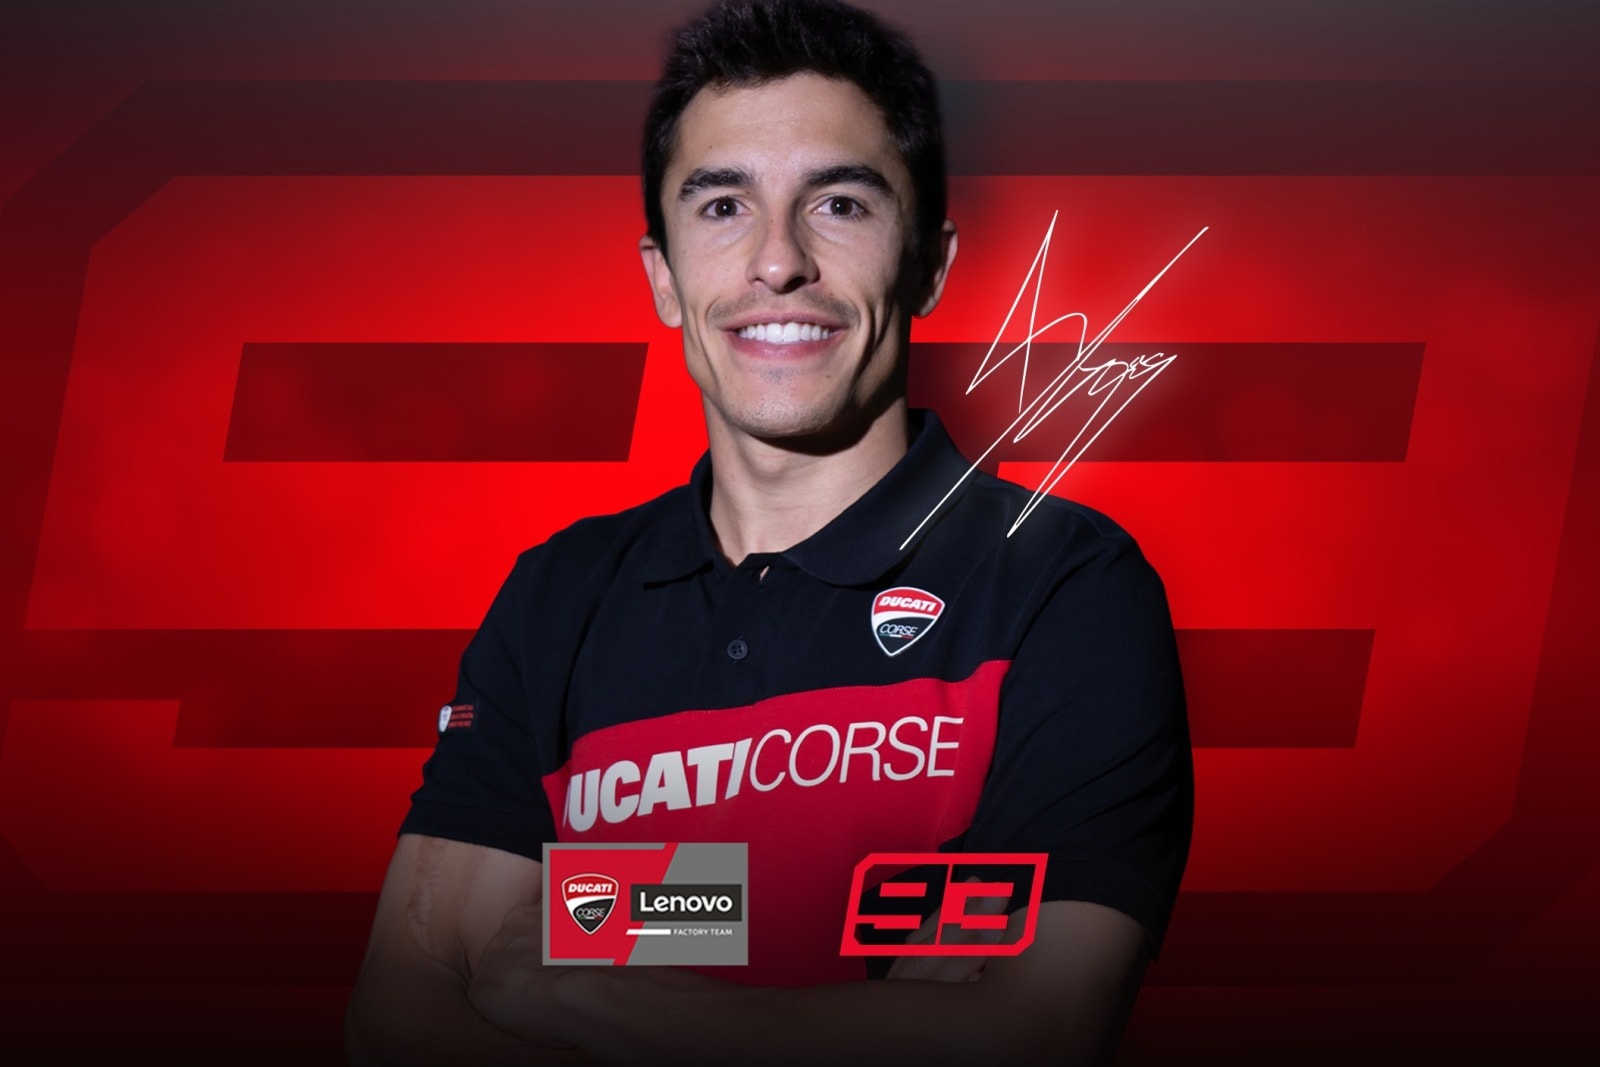 Marc Márquez nuovo pilota Ducati Lenovo Team fino al 2026